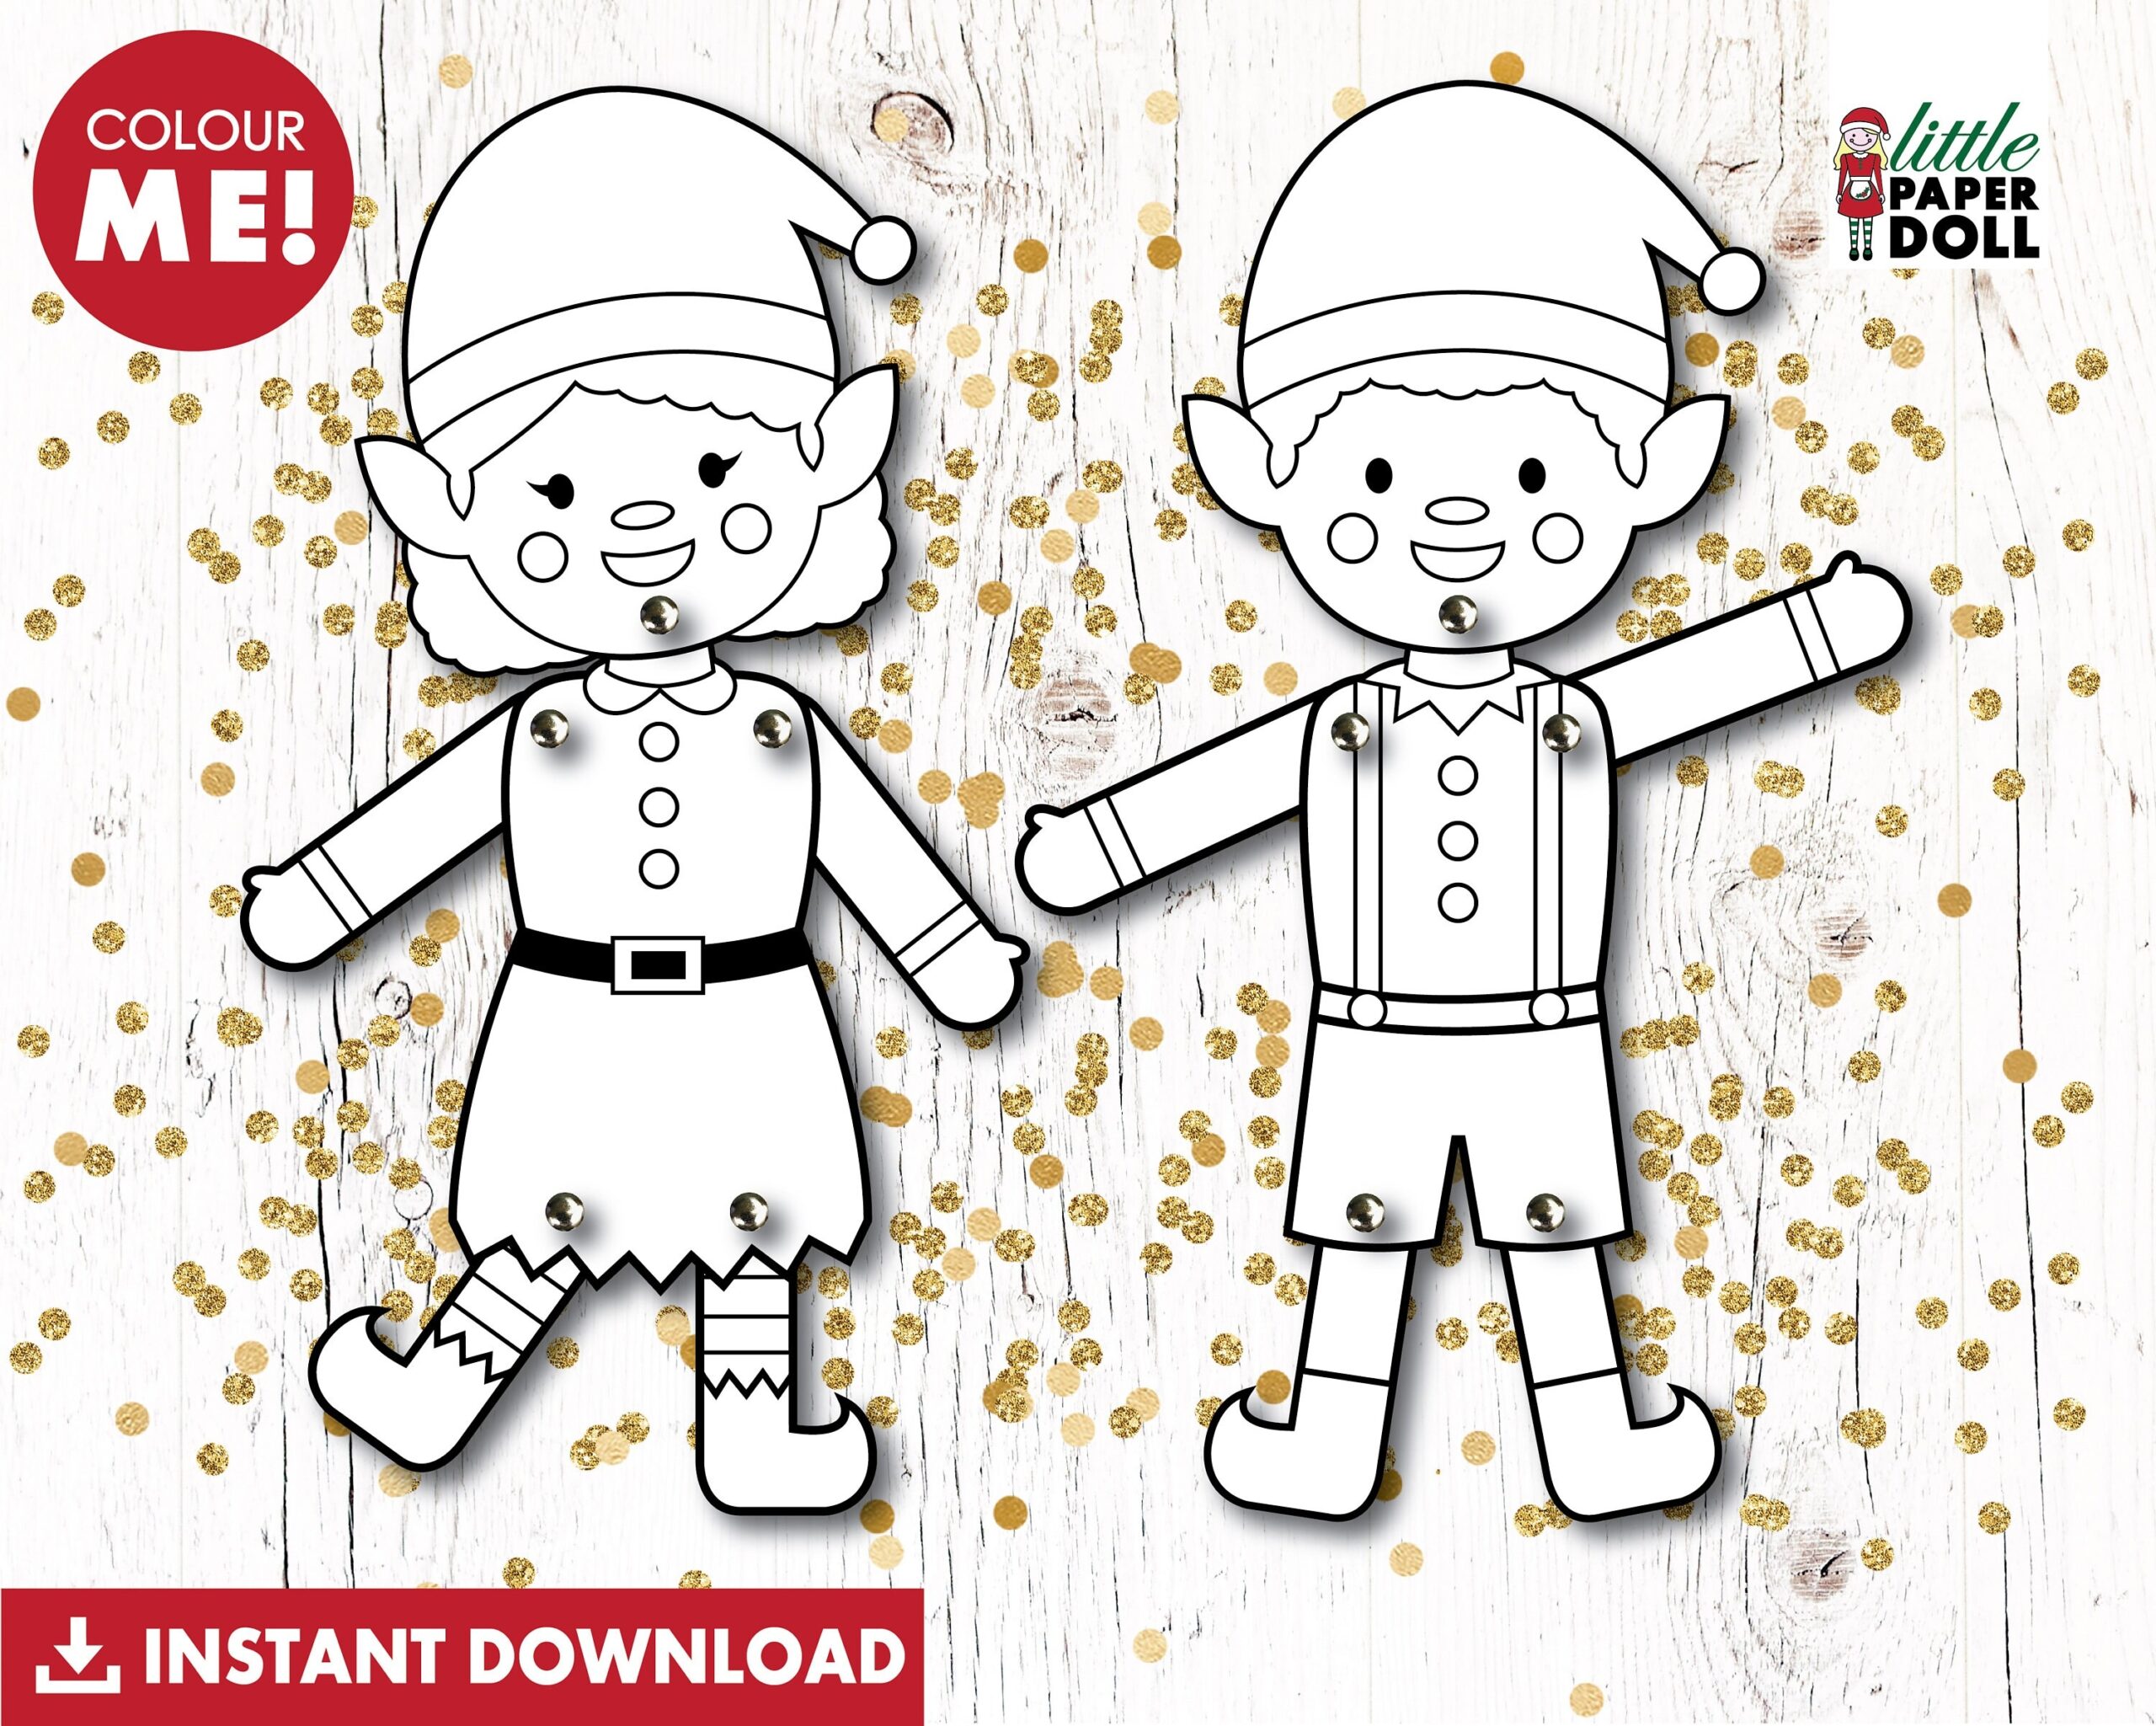 Elf Paper Dolls INSTANT DOWNLOAD Elf Paper Puppets Elf Christmas Cutout Activity DIY Elf Kids Christmas Craft Etsy